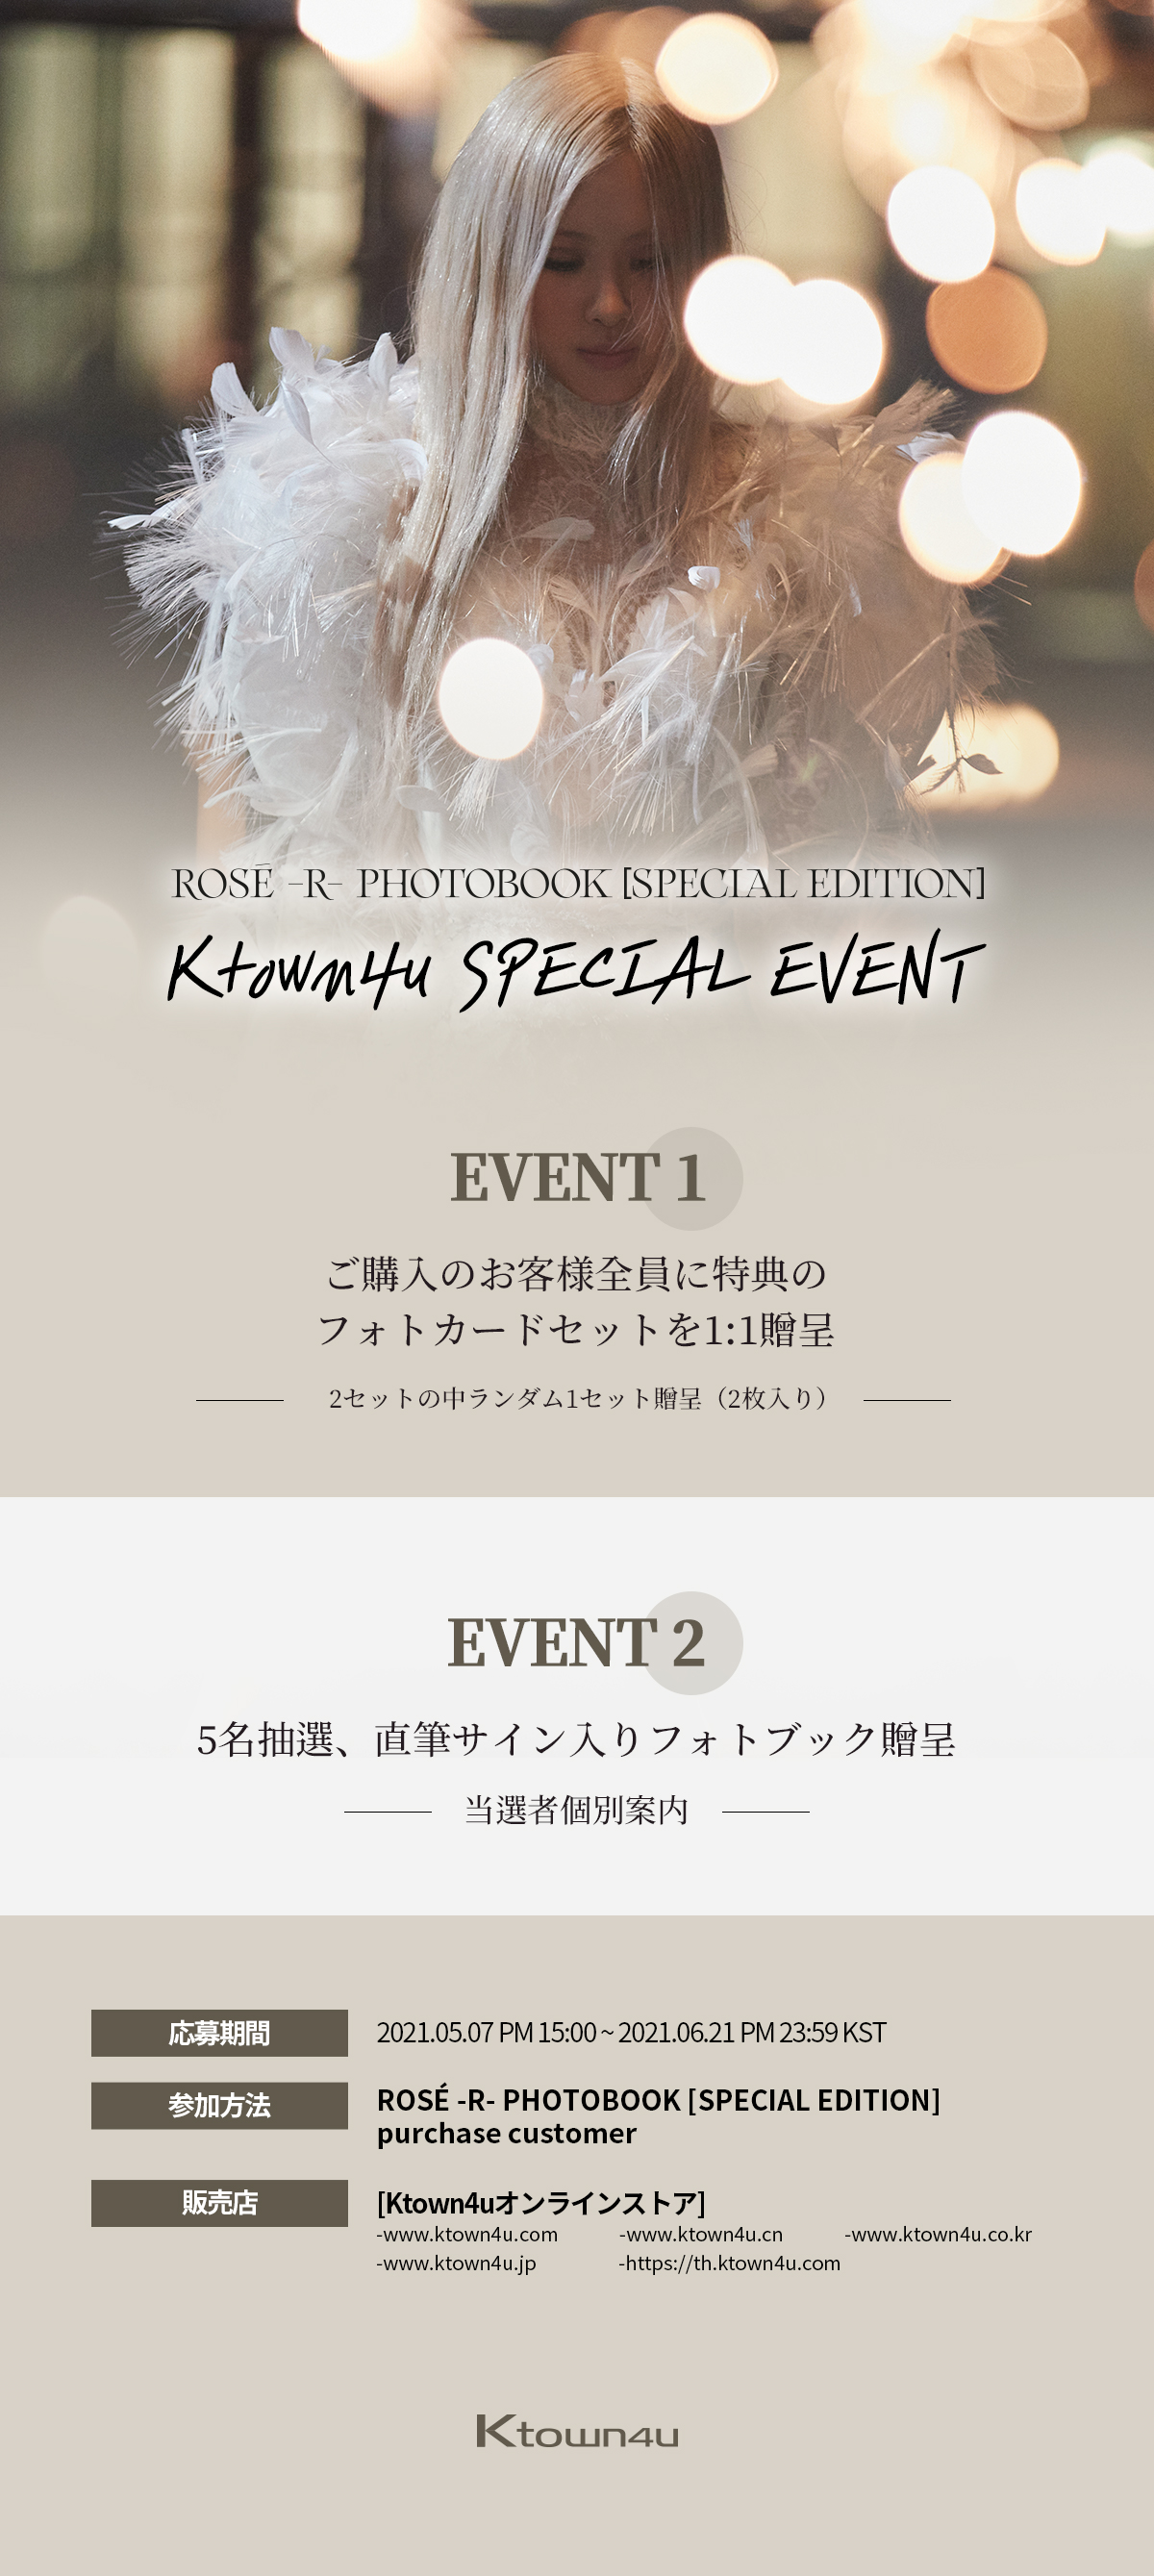 jp.ktown4u.com : event detail_ROSE -R- PHOTOBOOK